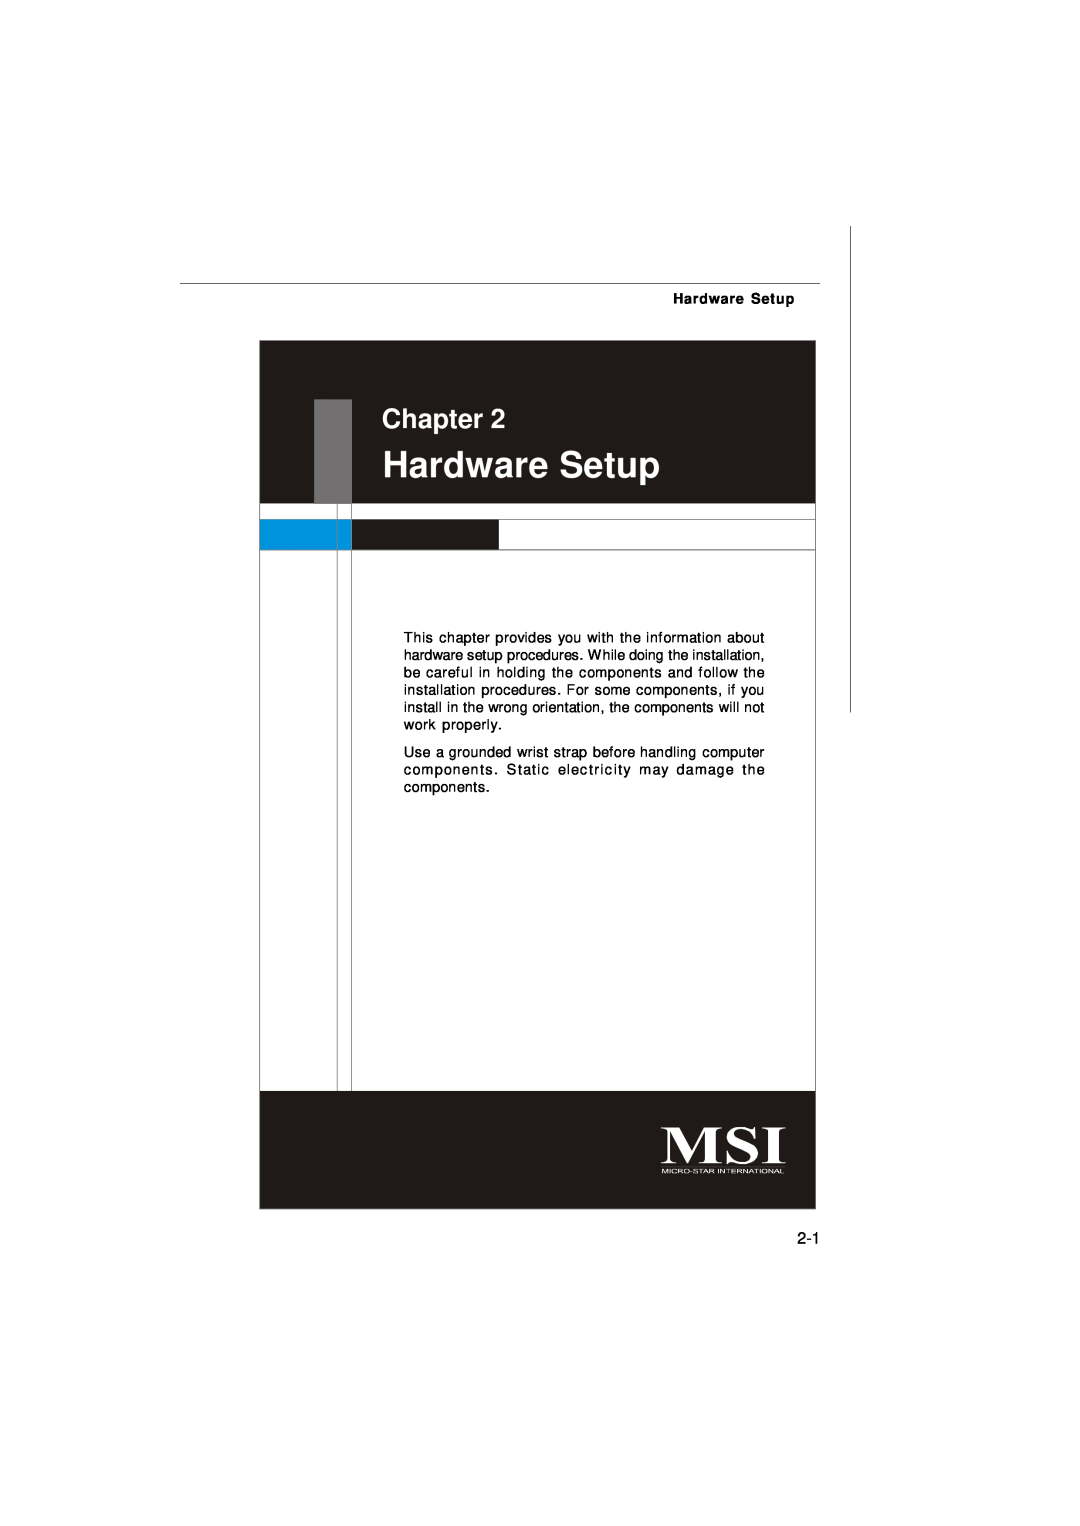 Nvidia MS-7374 manual Hardware Setup, Chapter 